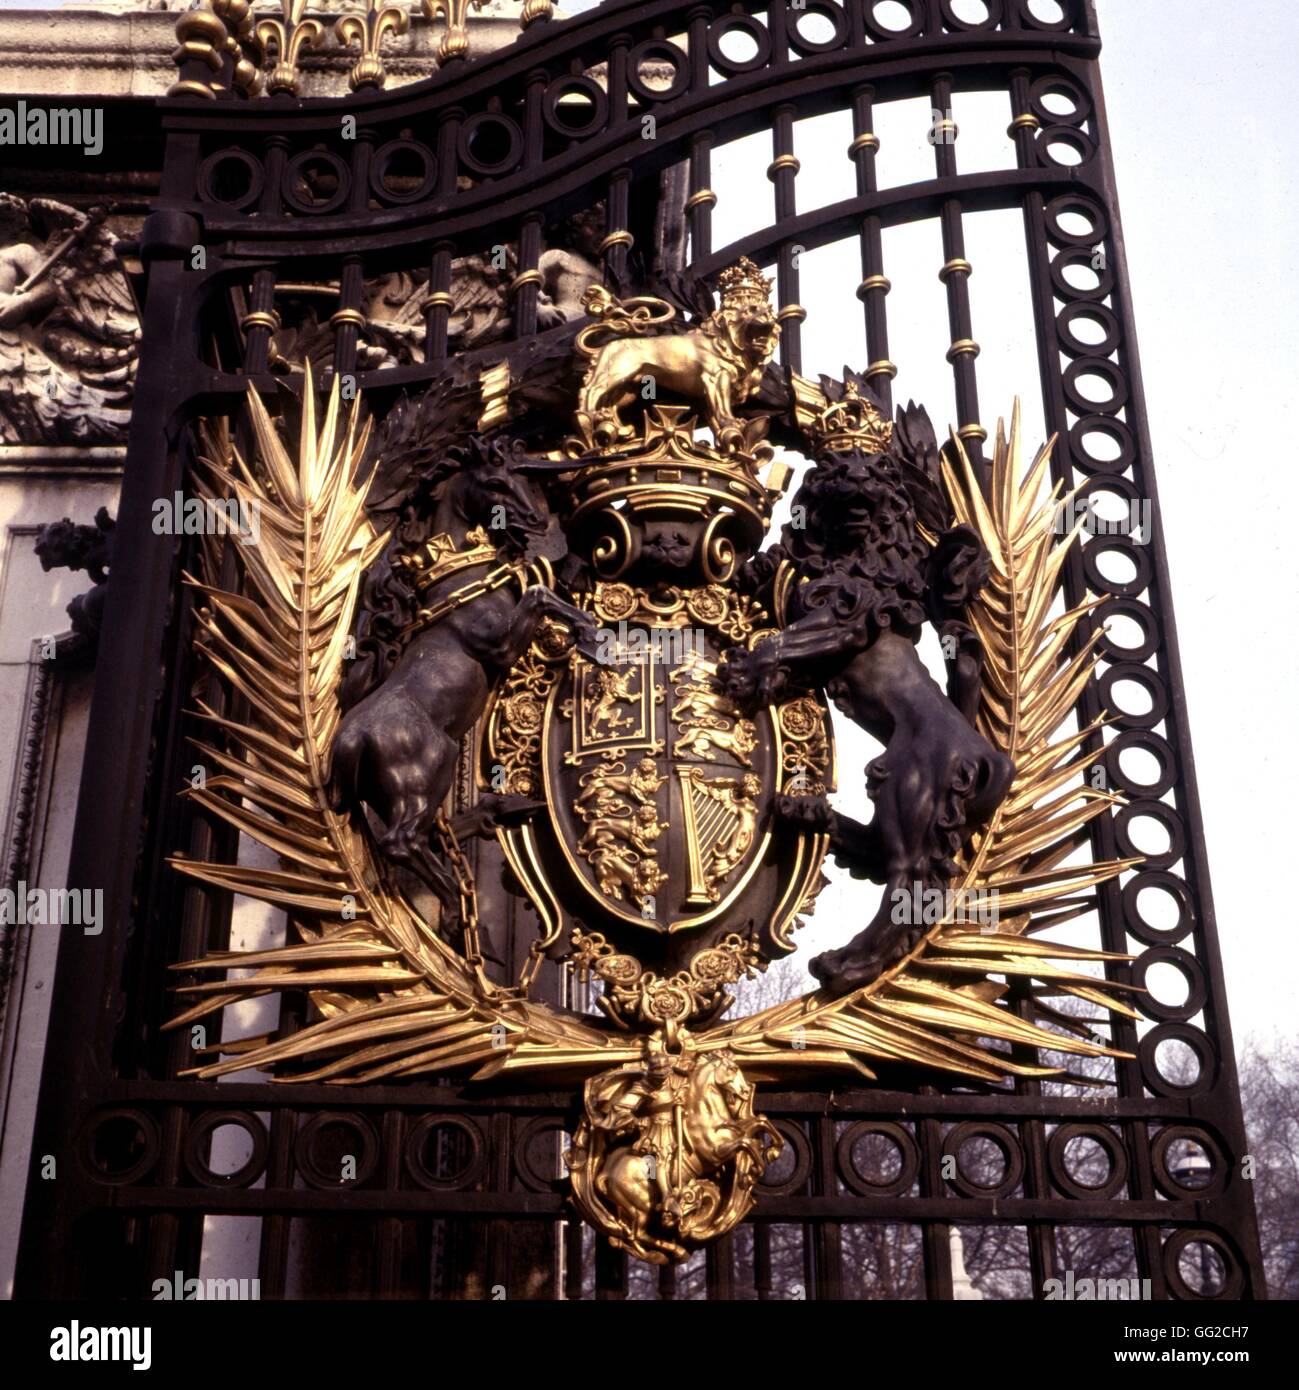 Royal coat of arms, Buckingham Palace, London 20th century England Stock Photo